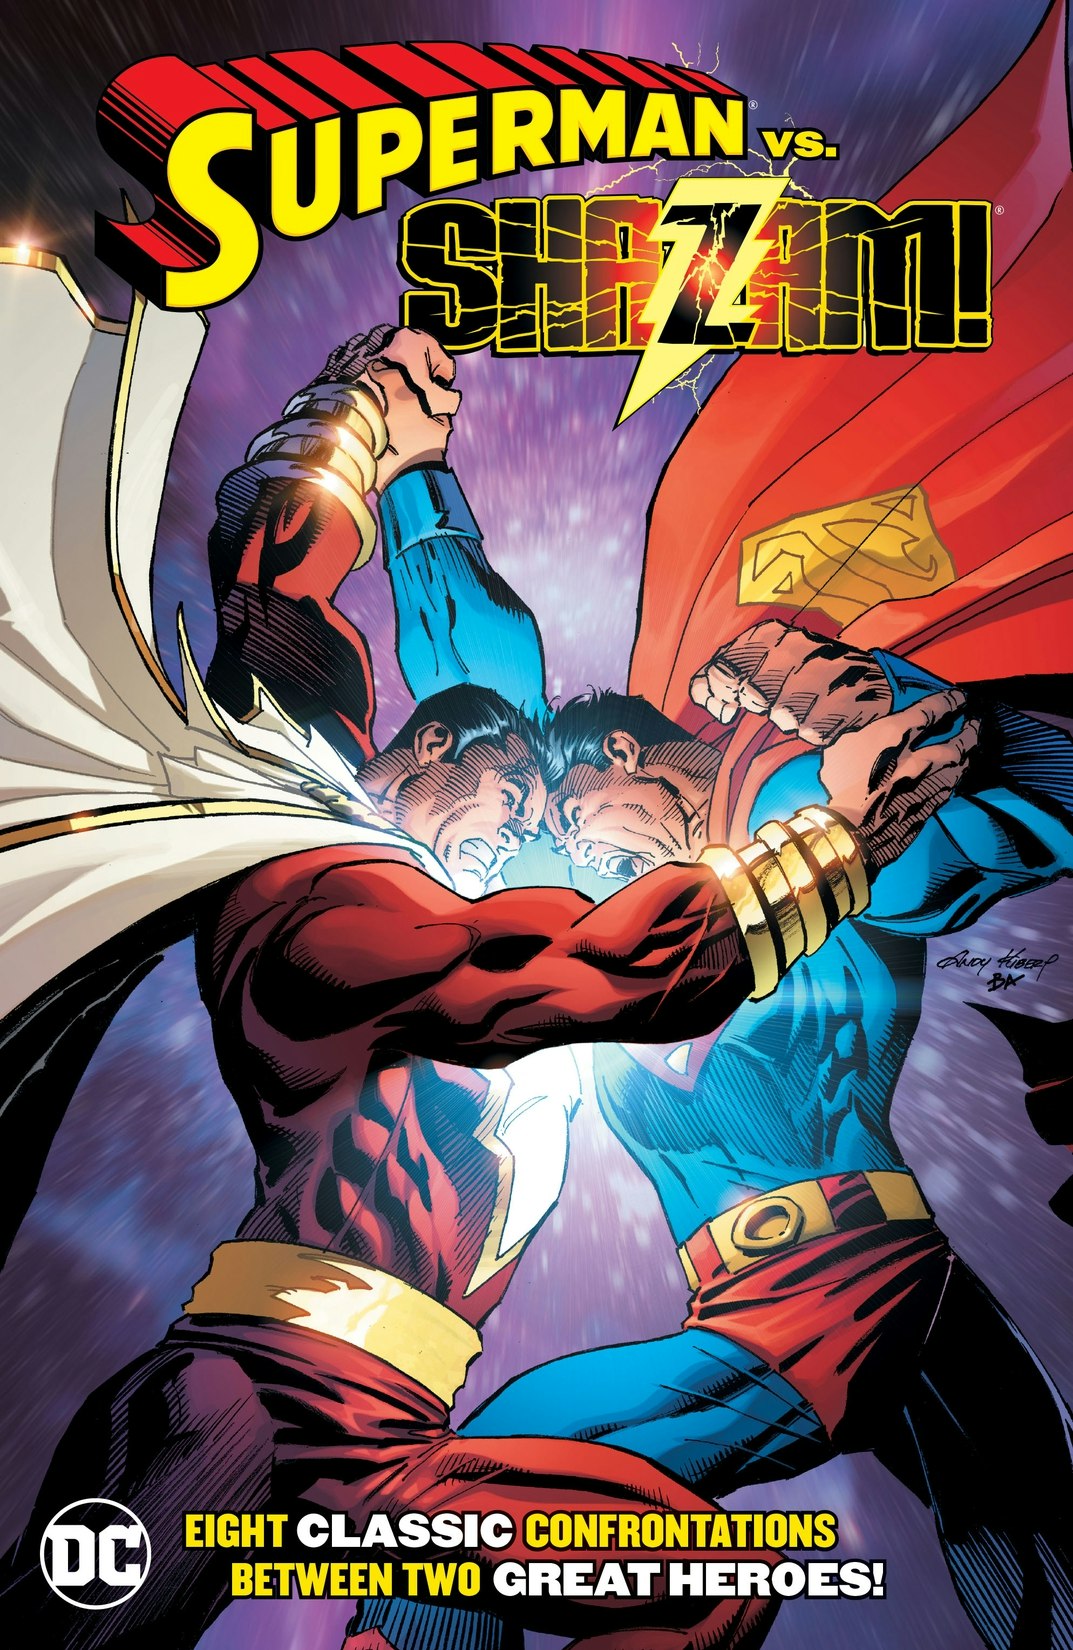 Shazam vs superman comic